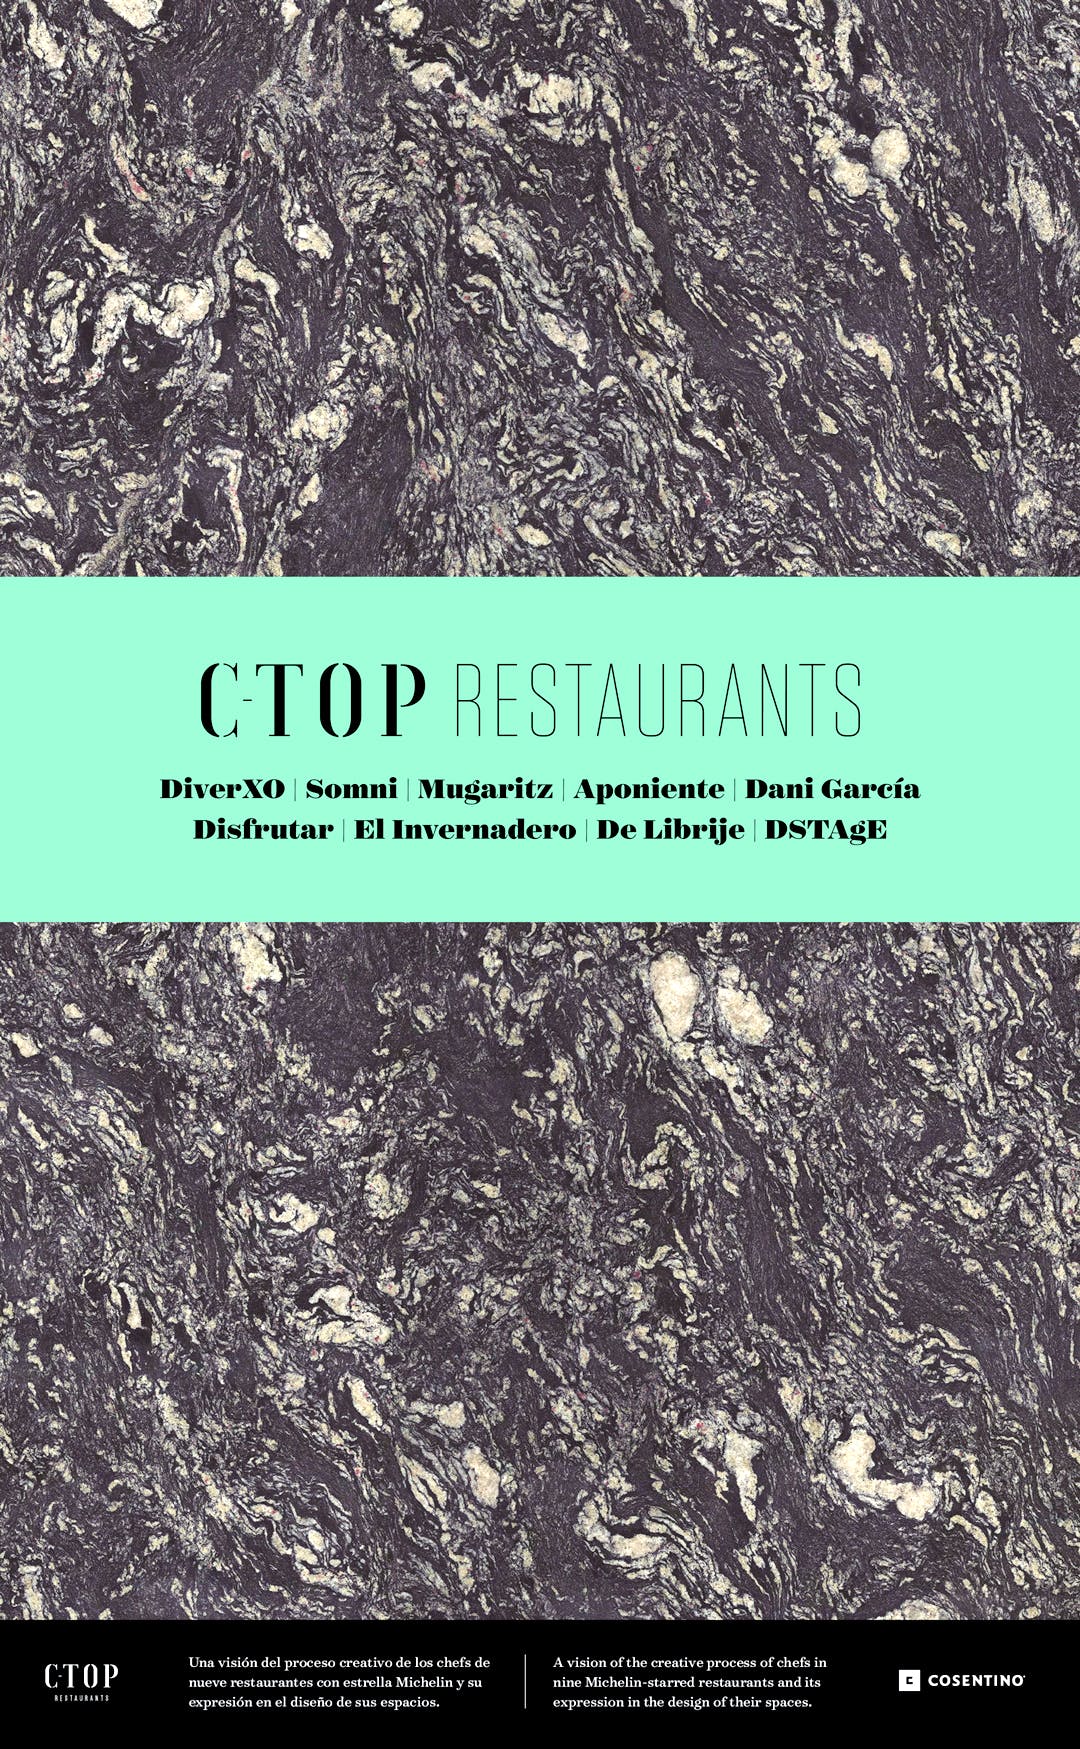 Image of ctop portada 1 1 1 in C-Top Restaurants wins the Grand Award at the Galaxy Awards - Cosentino